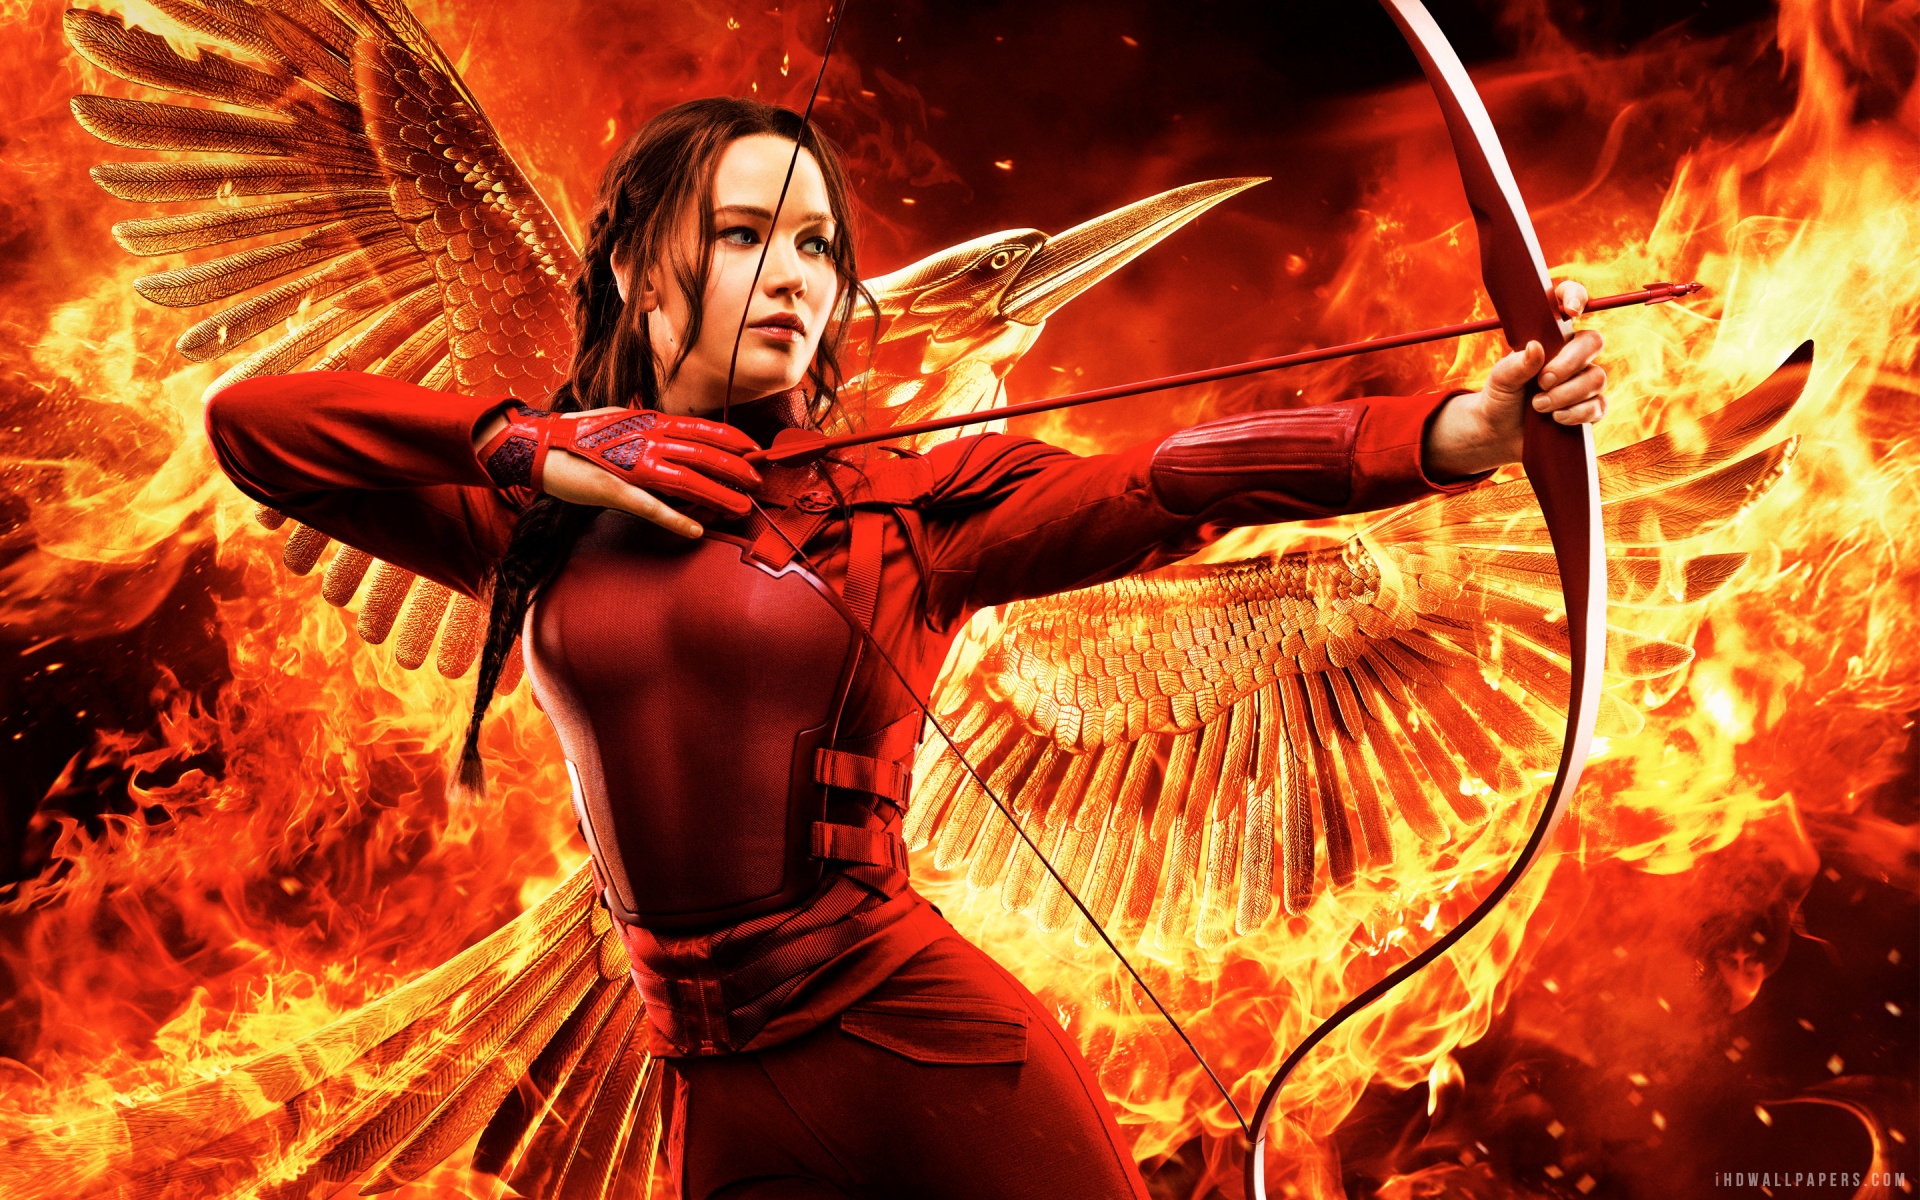  The Hunger Games Mockingjay Part 2 2015 HD Wallpaper   iHD Wallpapers 1920x1200